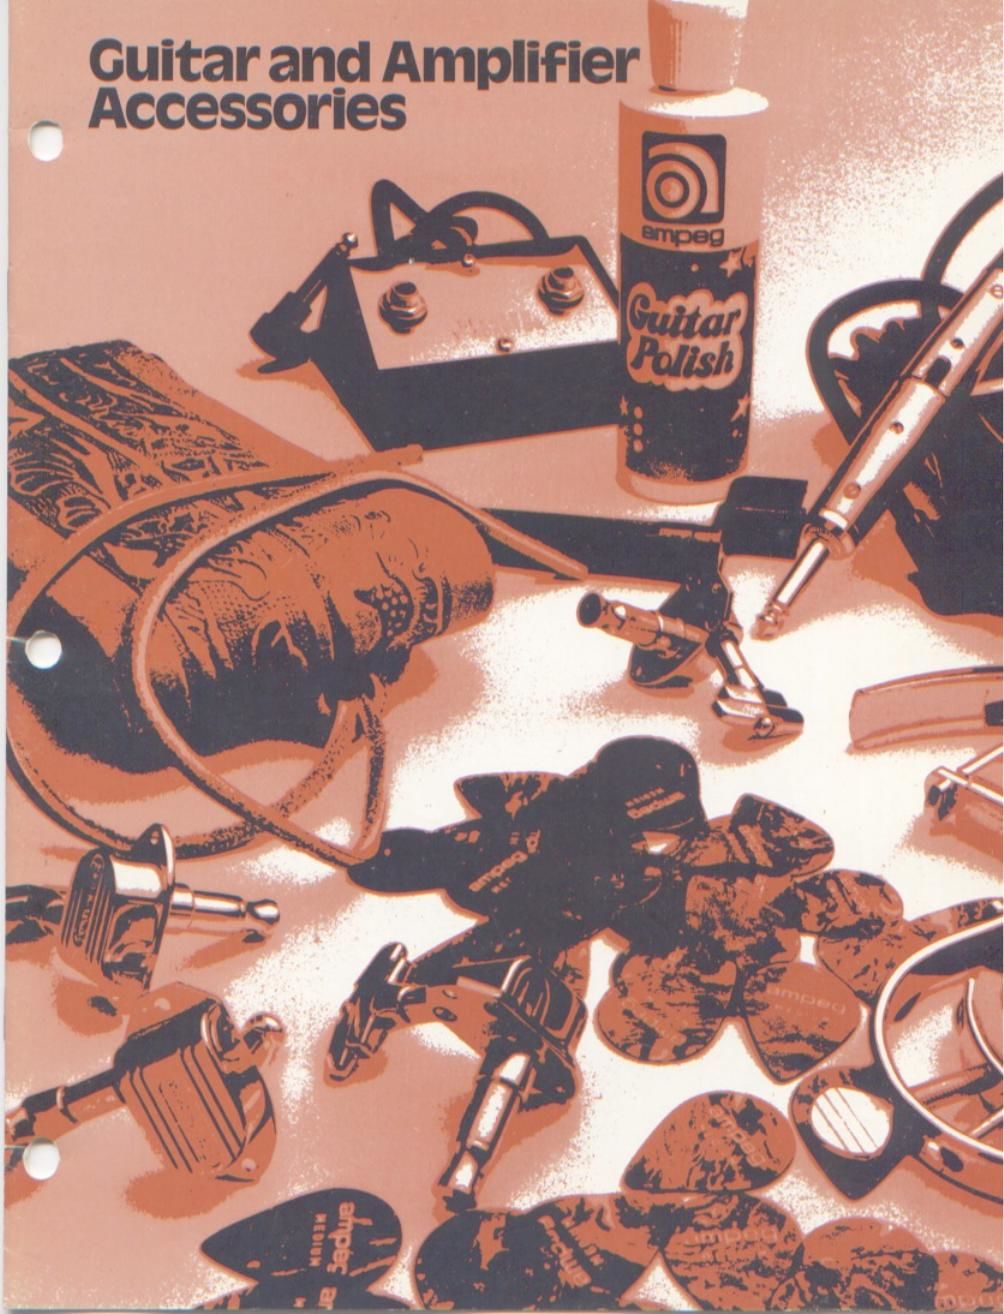 ampeg catalog 1970s accessories